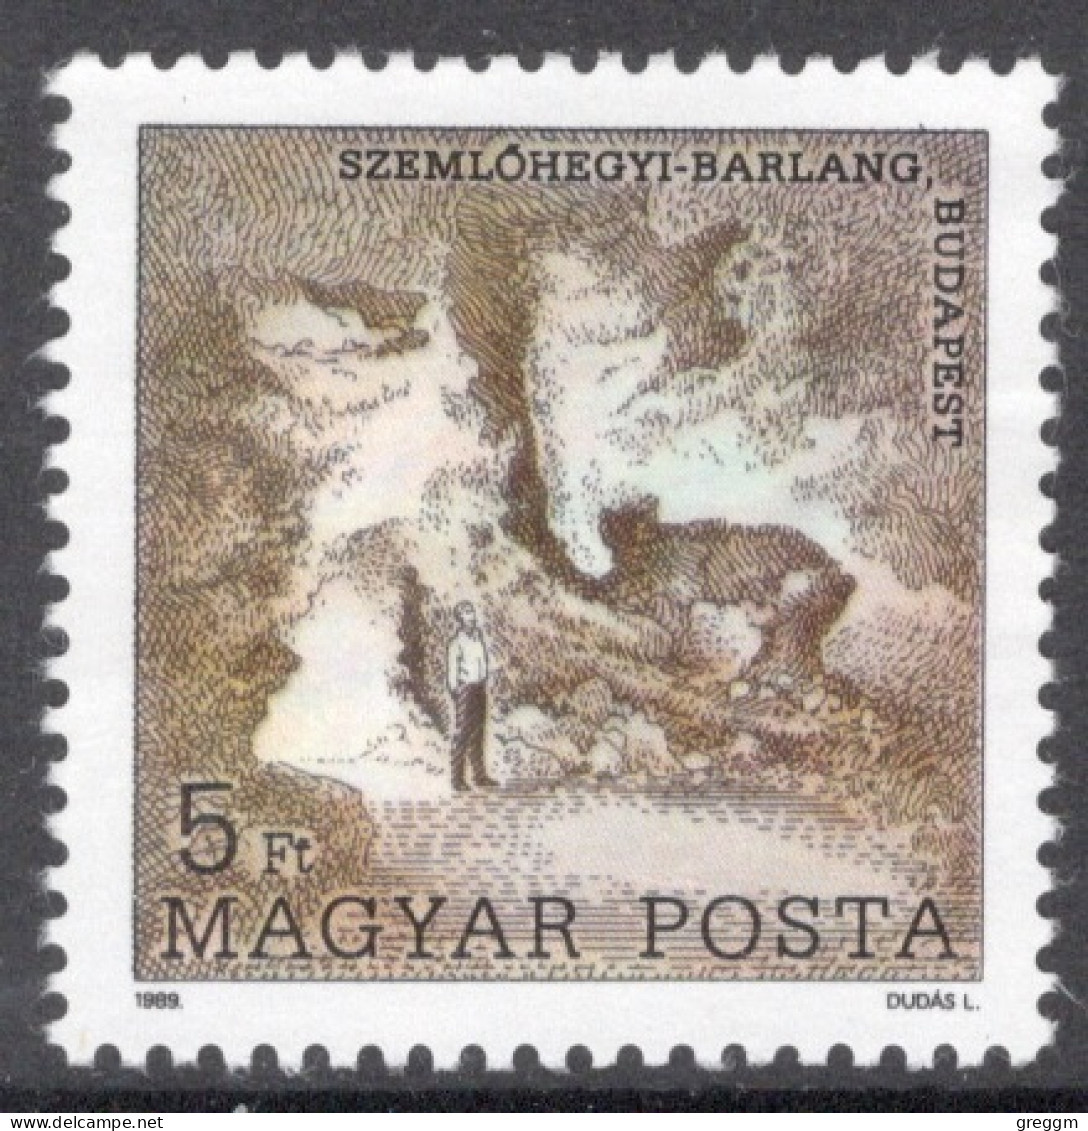 Hungary 1989 Single Stamp Celebrating World Speleology Congress In Fine Used - Usati